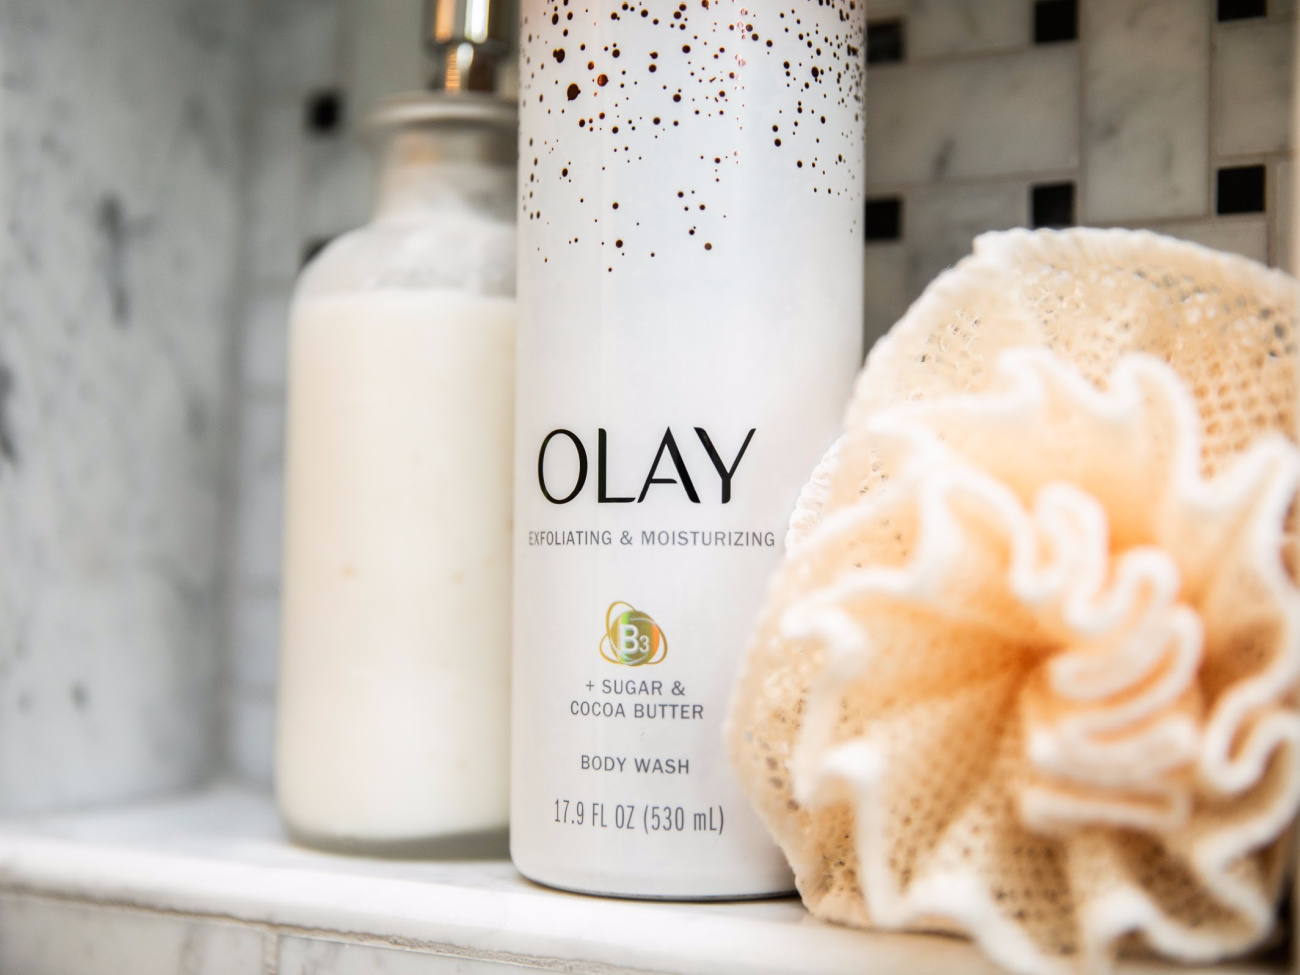 Get Olay Premium Body Wash For Just $2.99 At Kroger (Regular Price $10.49)